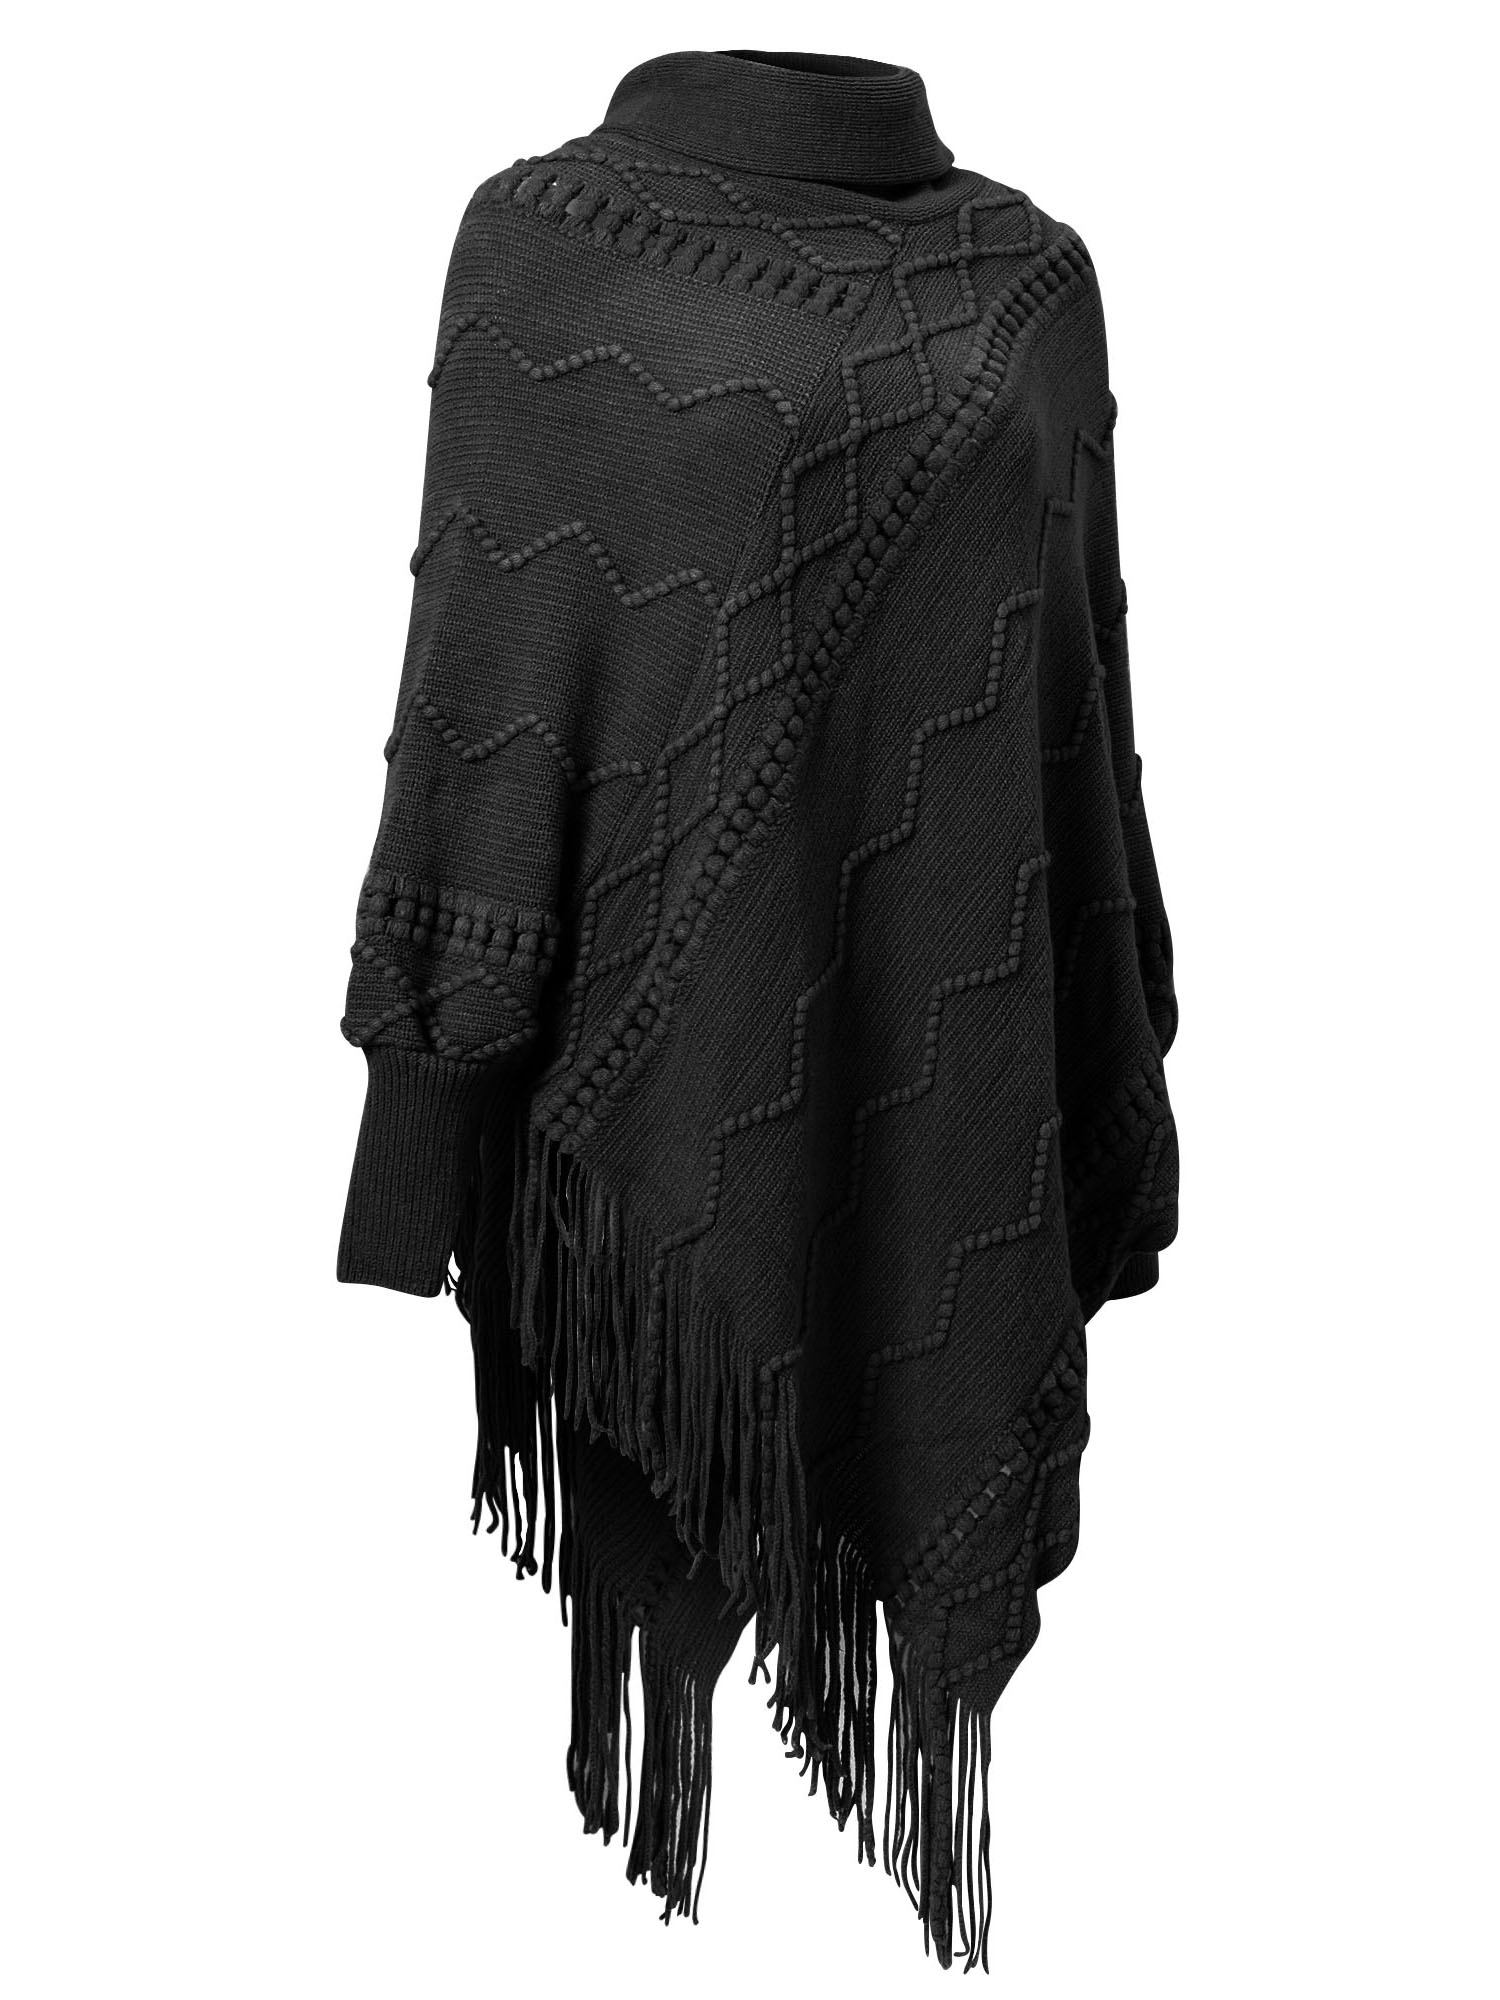 LELINTA Womens Knit Tassel Poncho Cardigan Fringed Pullover Cozy Sweater Wrap Jacket - image 1 of 4